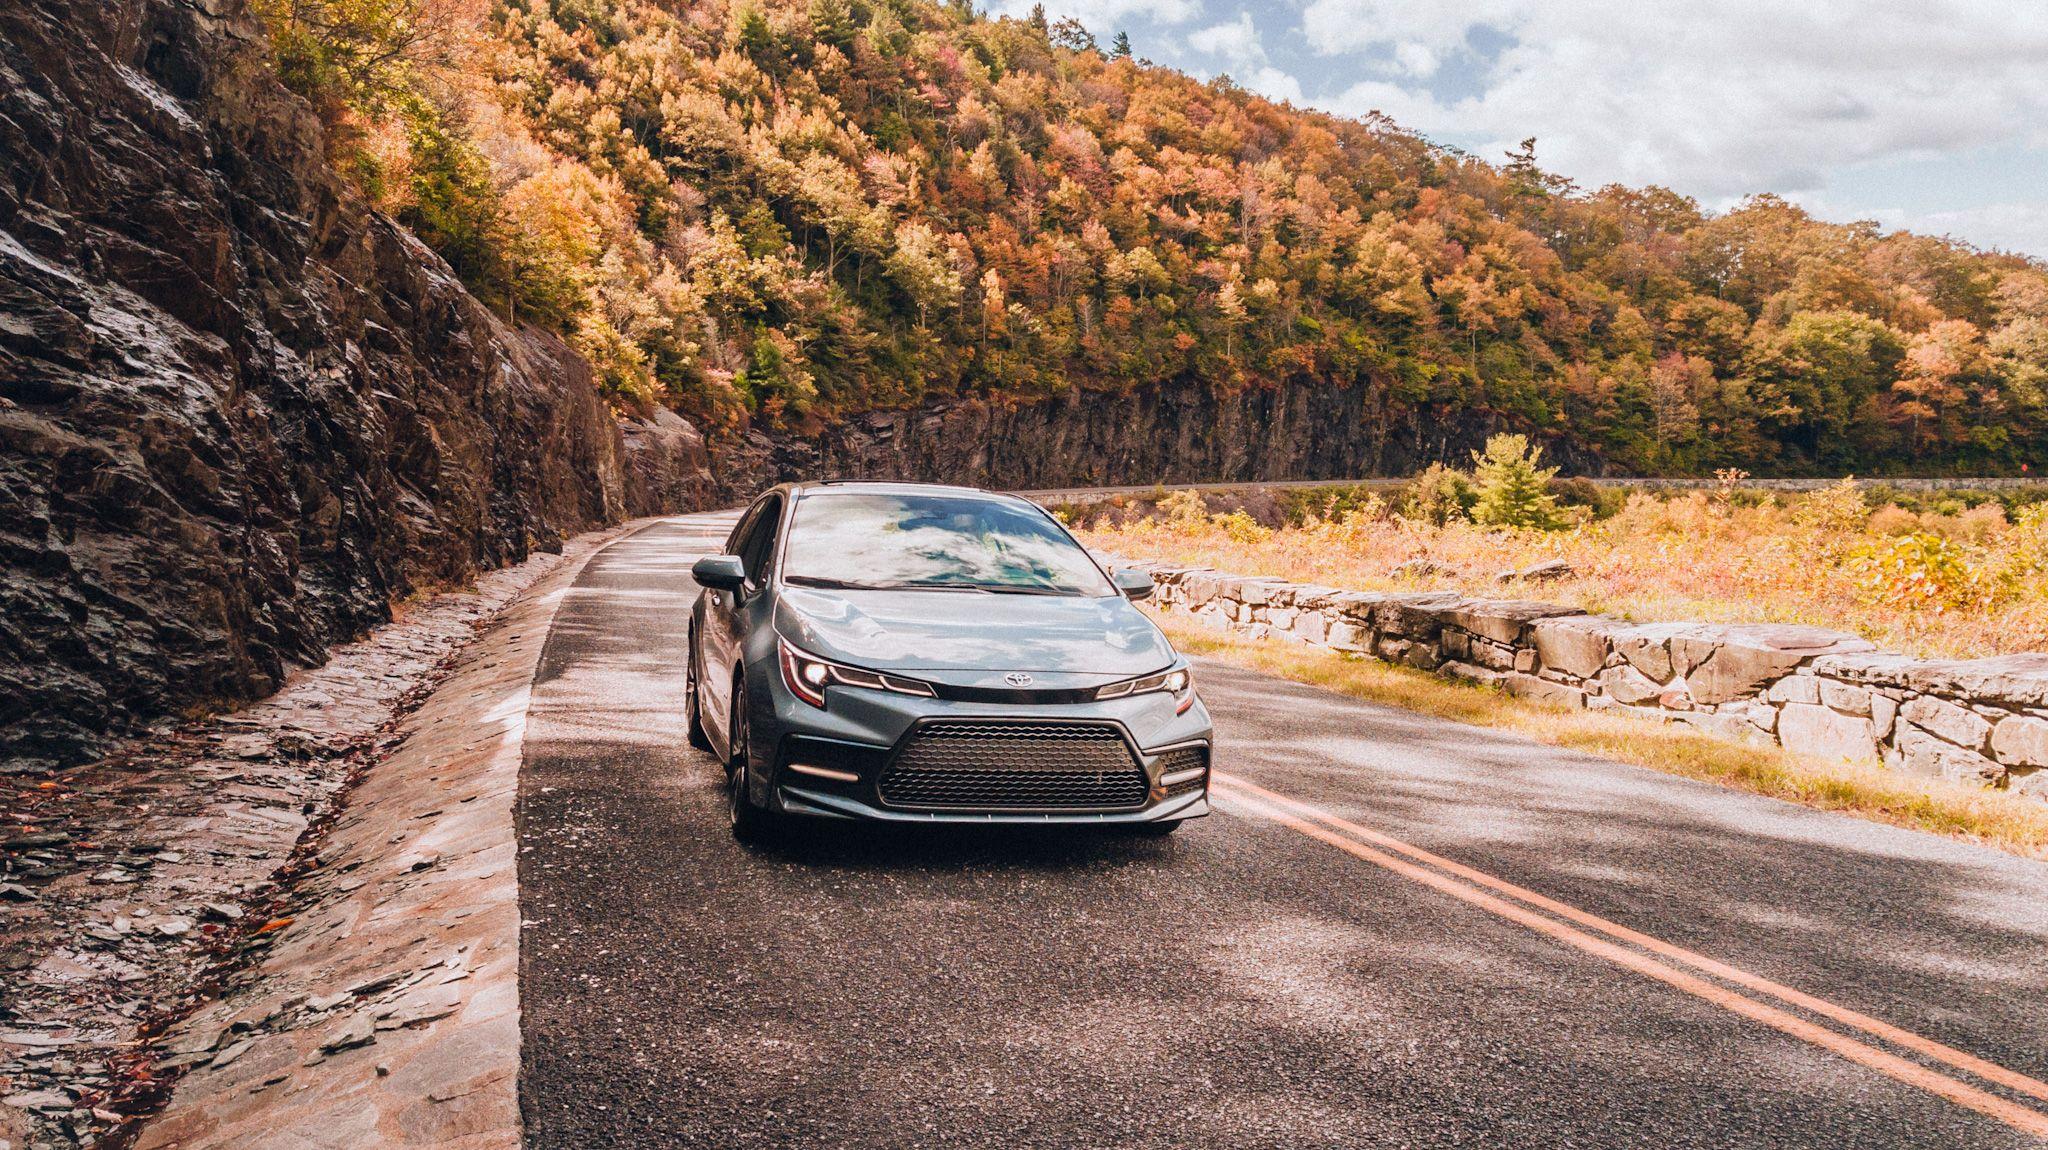 Toyota sedan driving down scenic mountain road